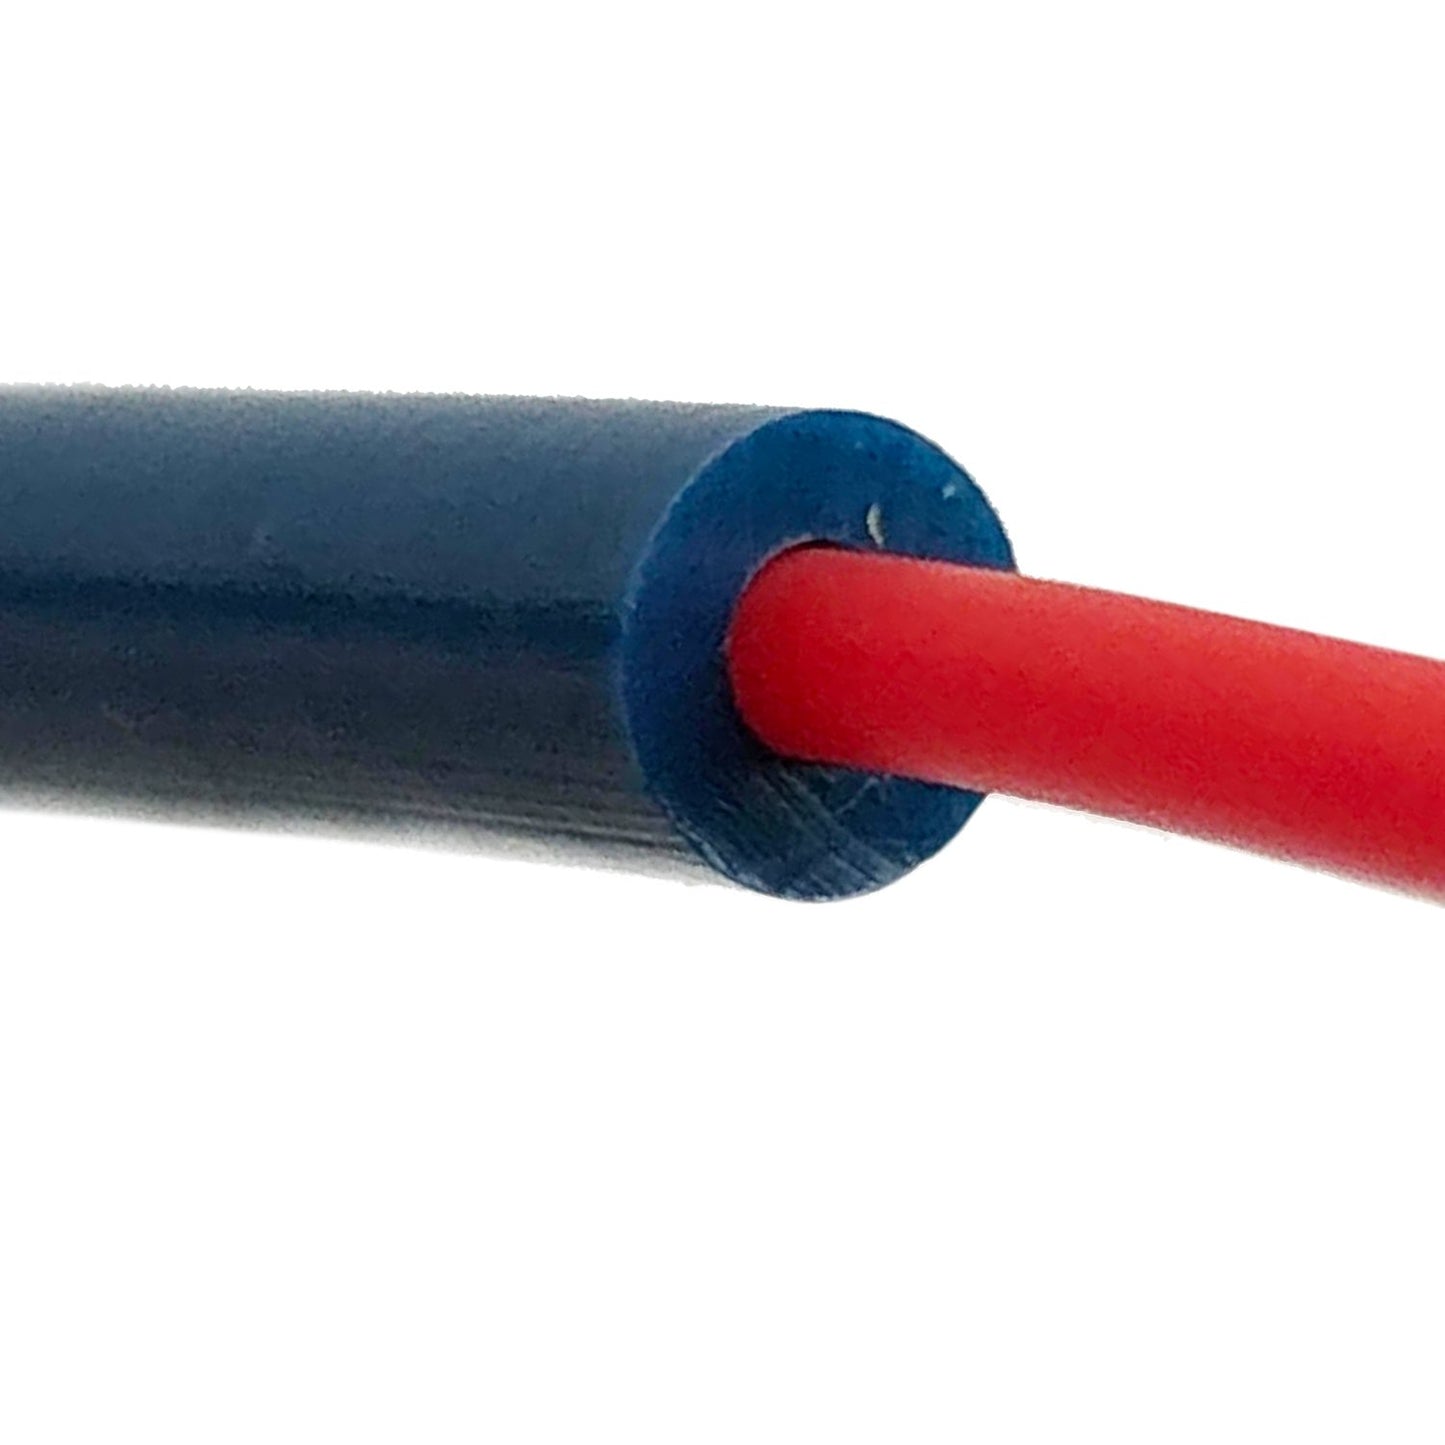 Capricorn XS PFTE Bowden tubing 1.75mm filament